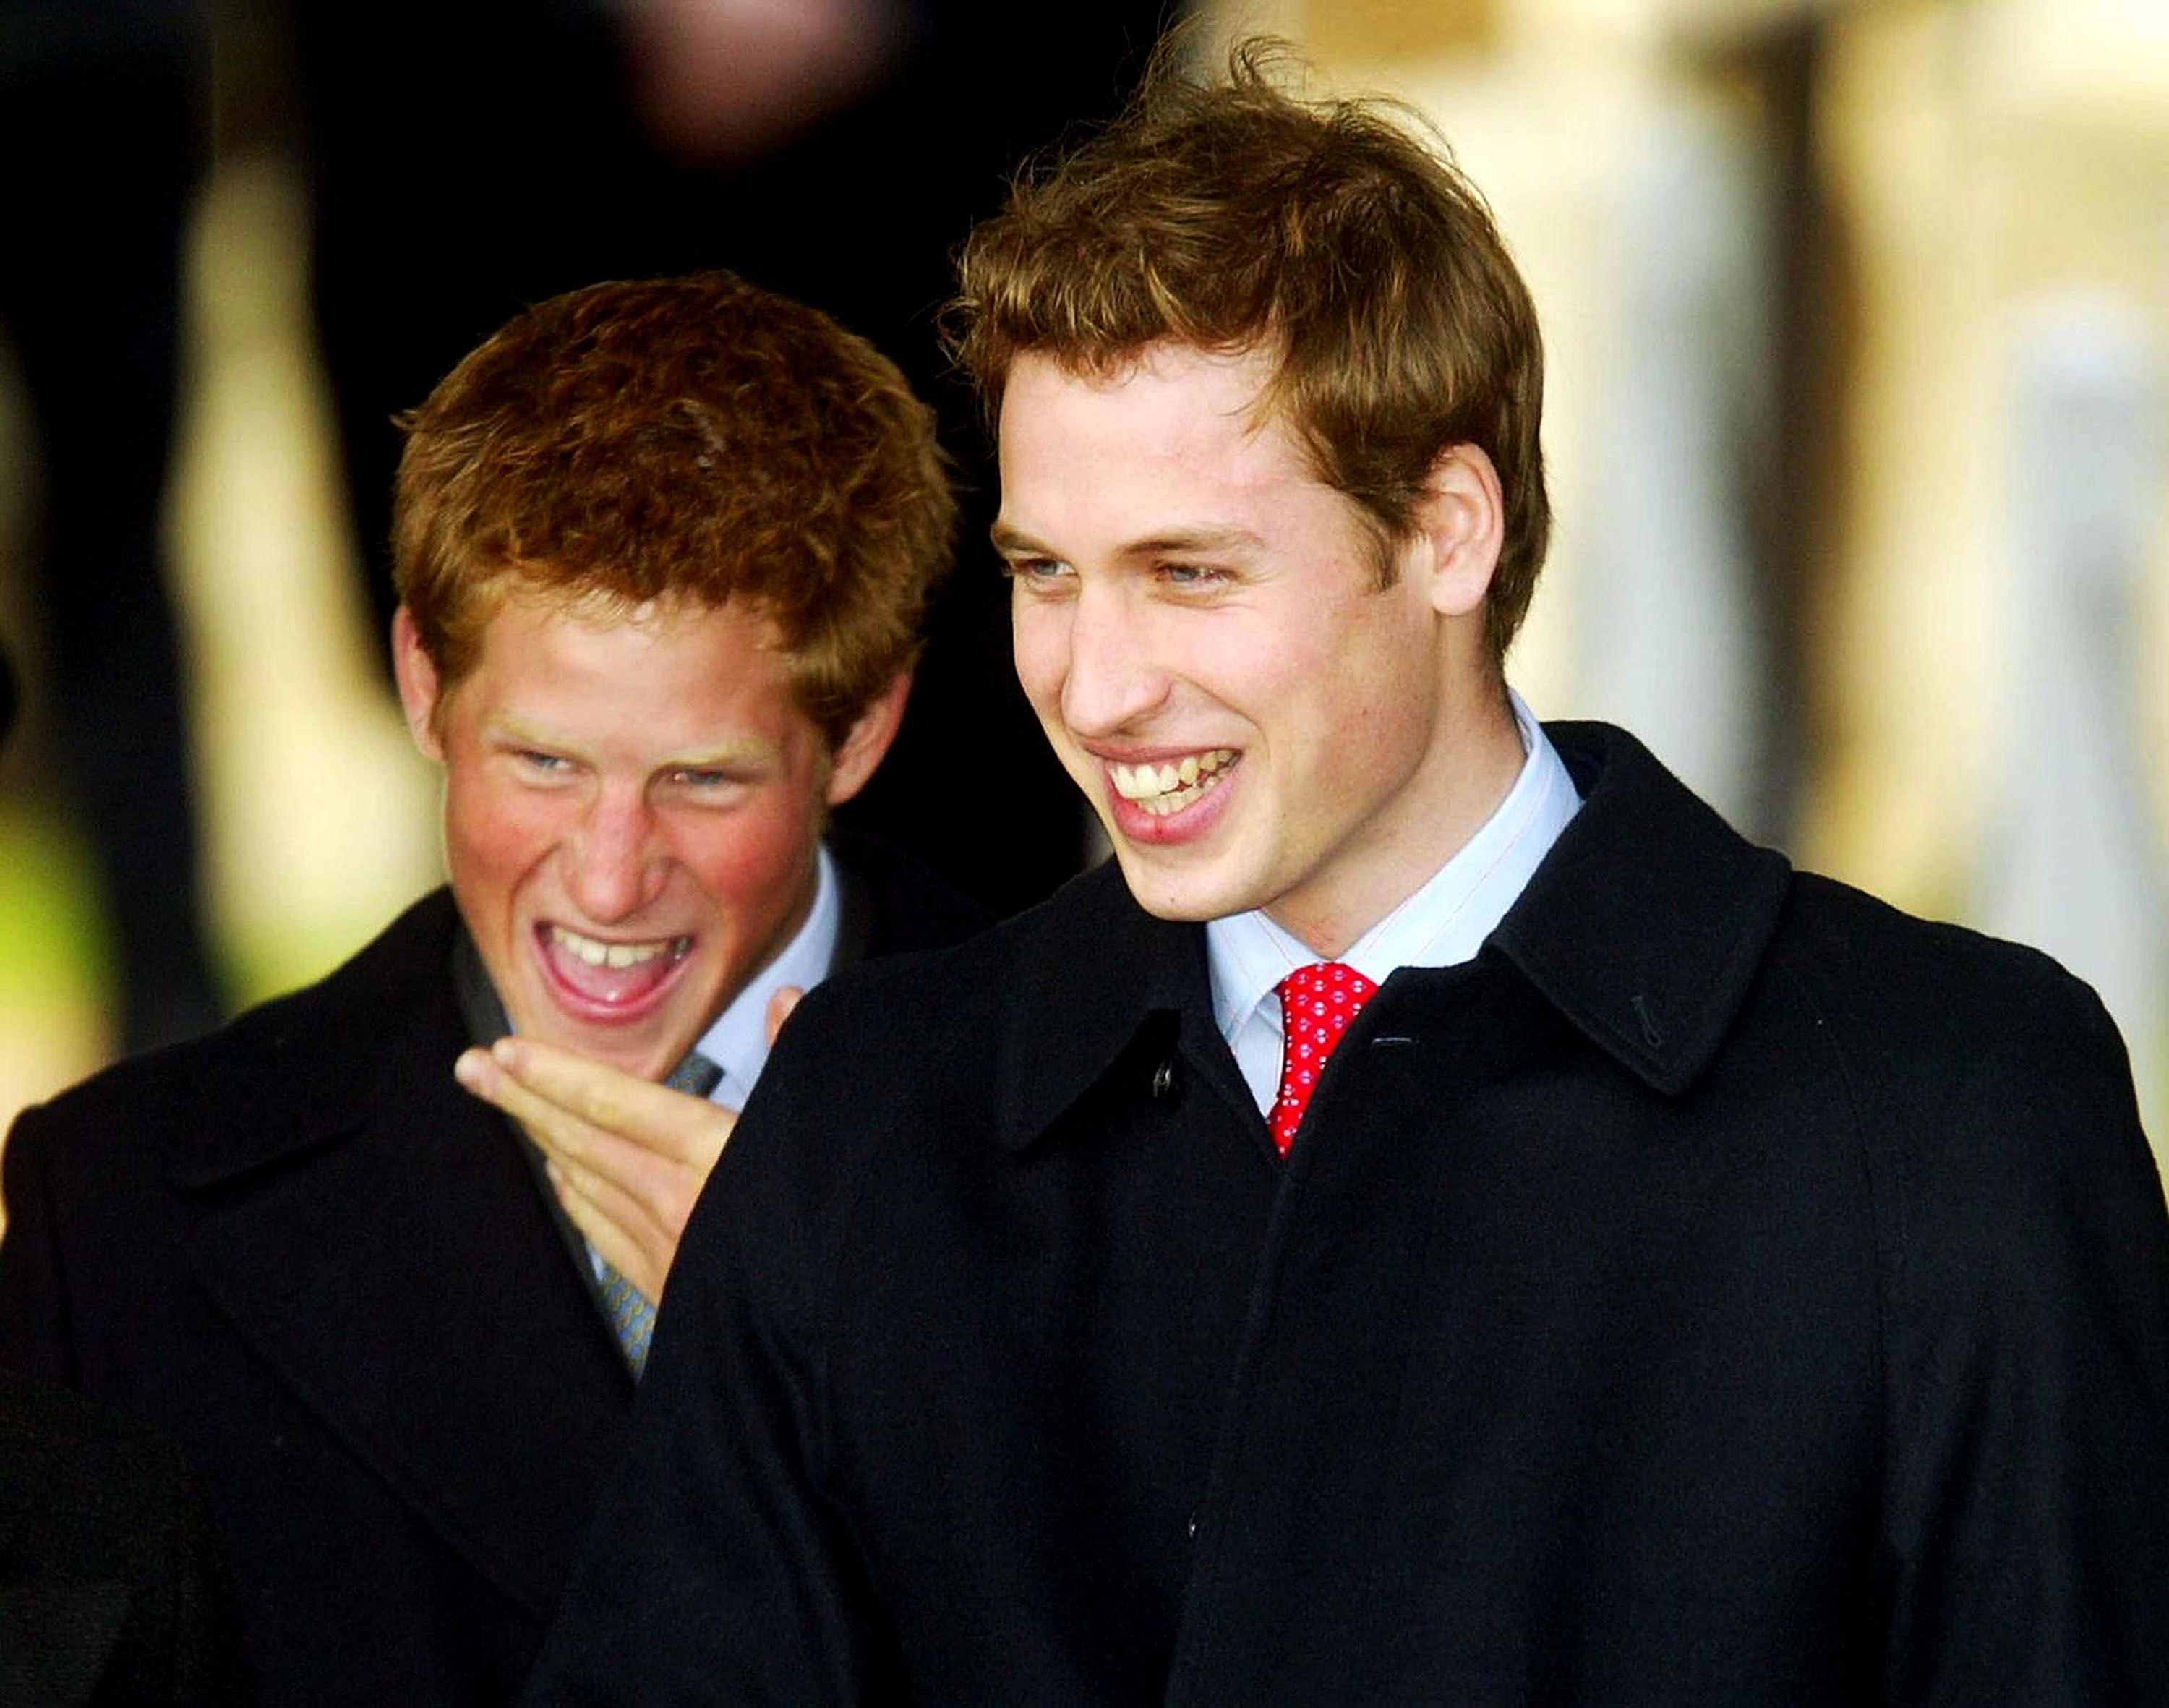 Bila Pangeran Harry Dinilai Kerap Buat Onar Maka Ternyata Pangeran William Juga Punya Sifat Yang Sama Saat Remaja Semua Halaman Nova